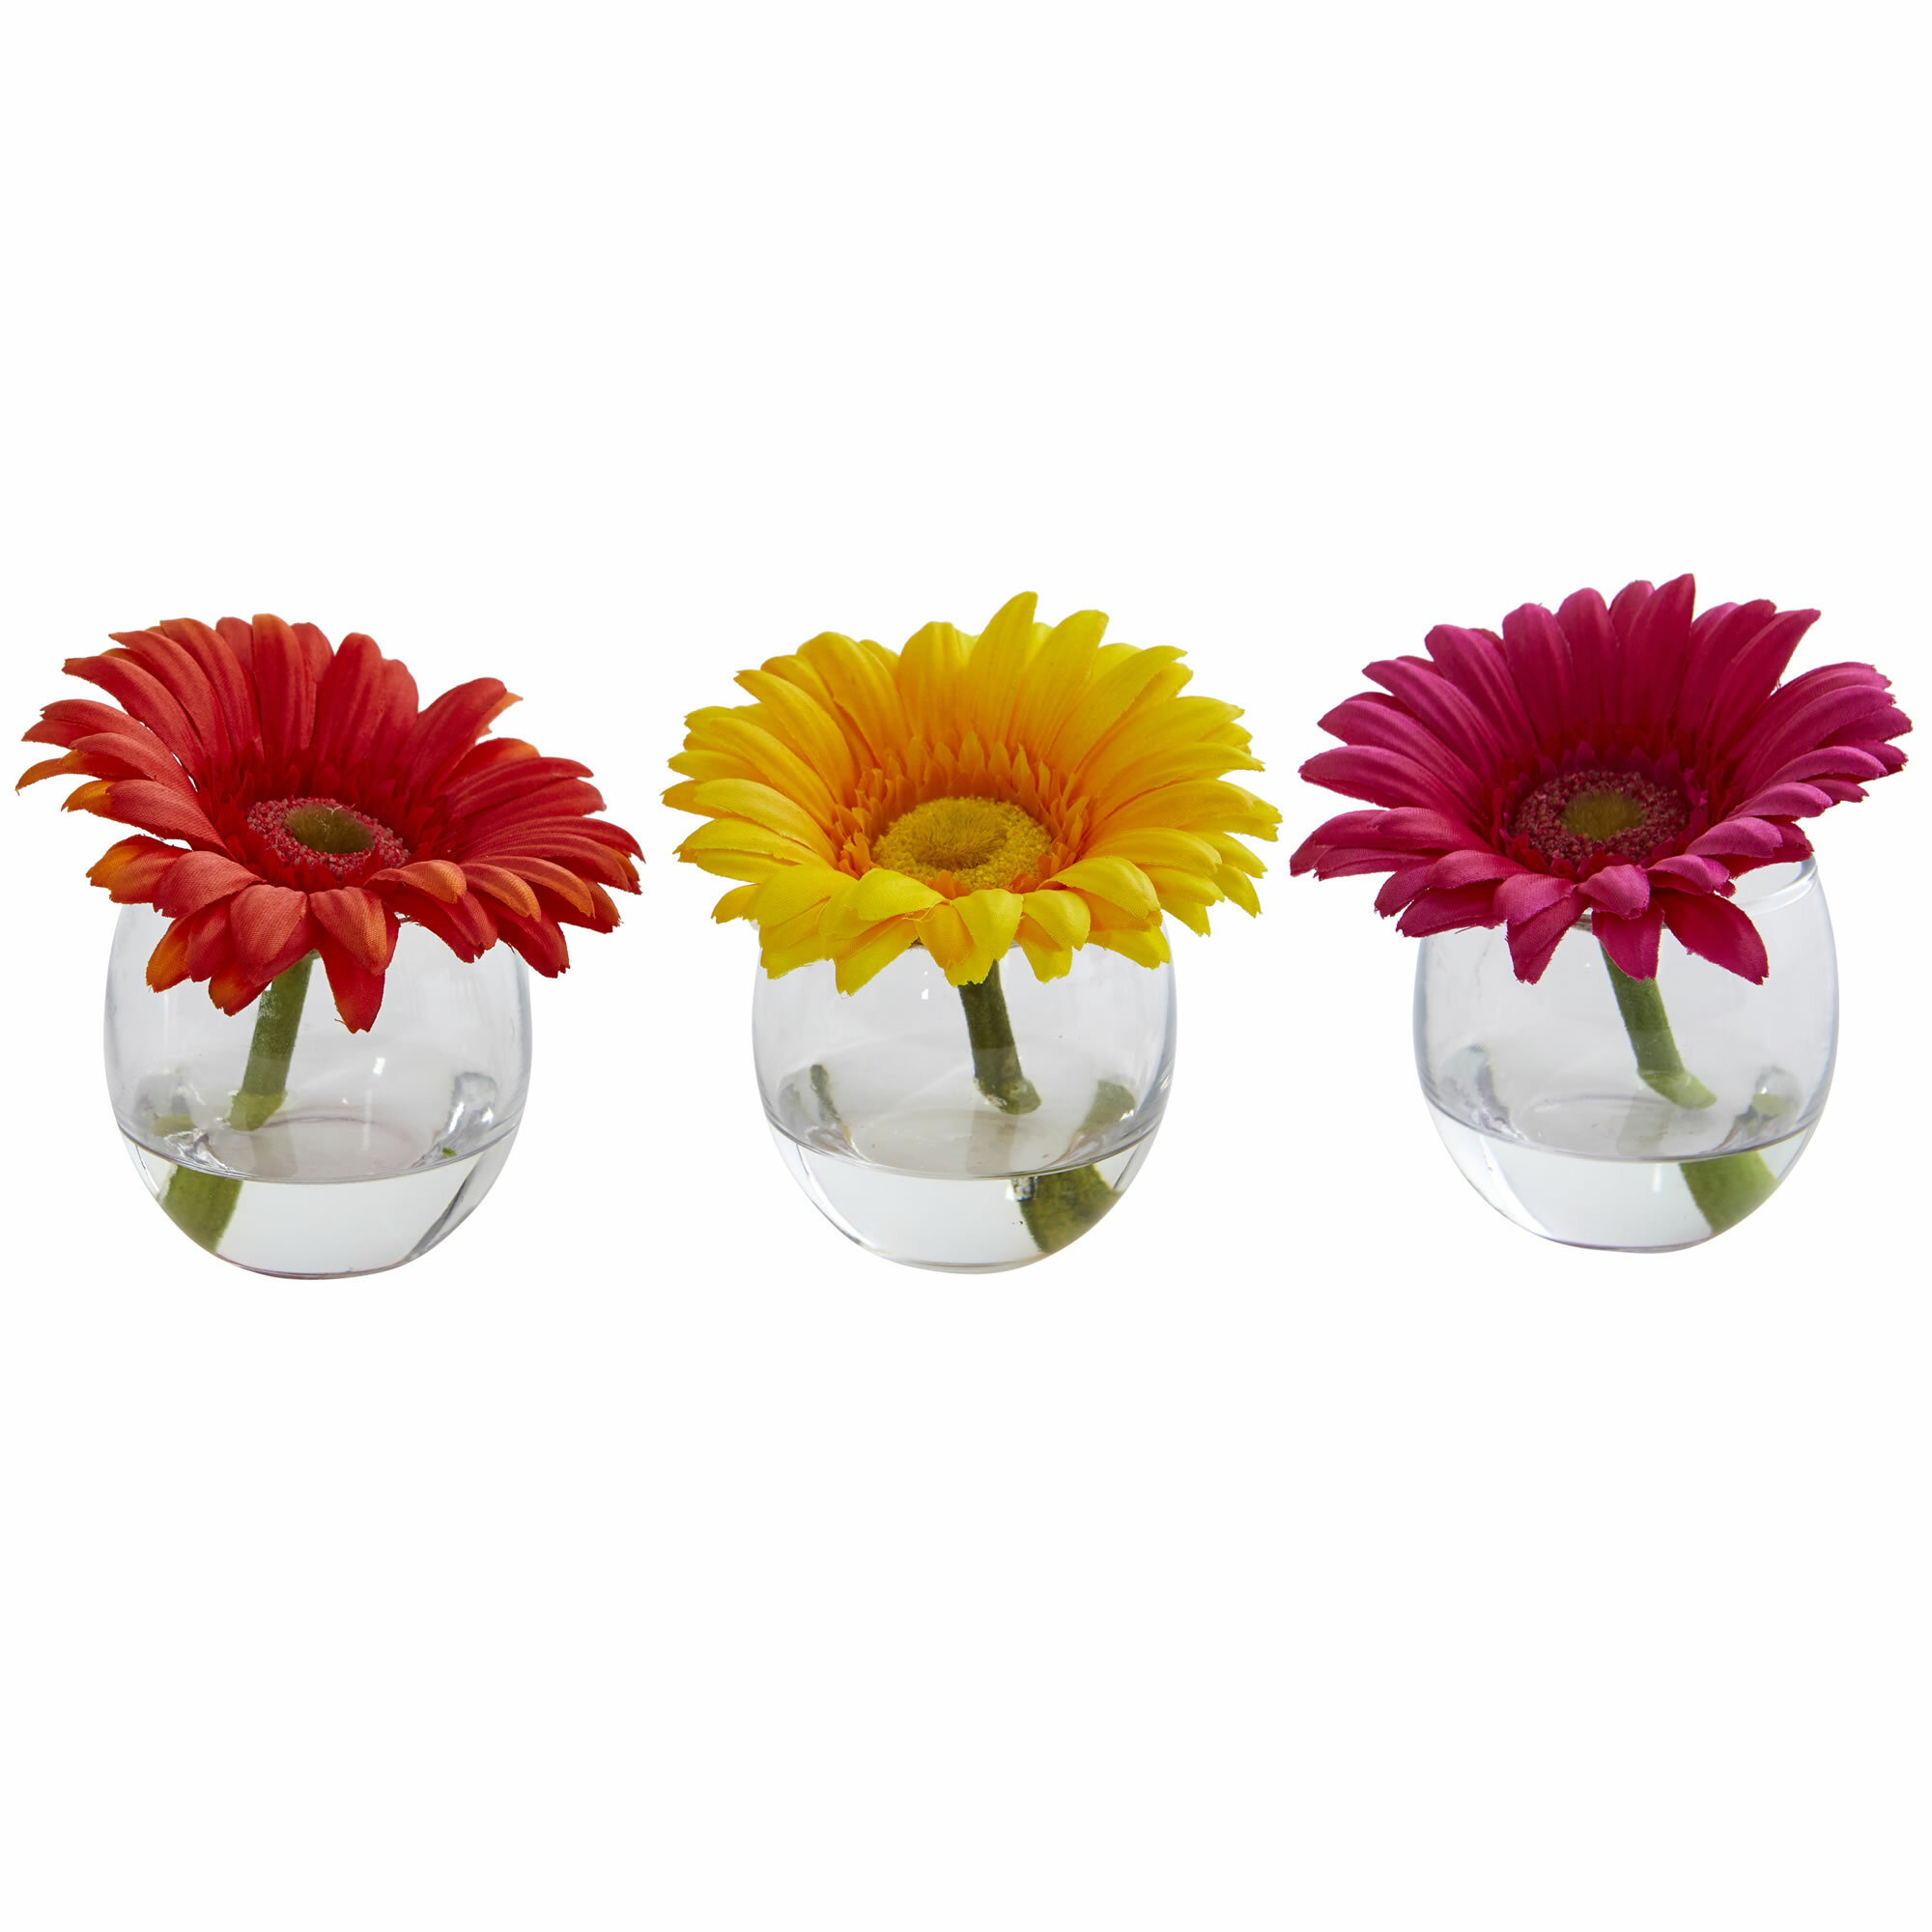 Ebern Designs Gerbera Daisies Floral Arrangements And Centerpieces In Vase Reviews Wayfair